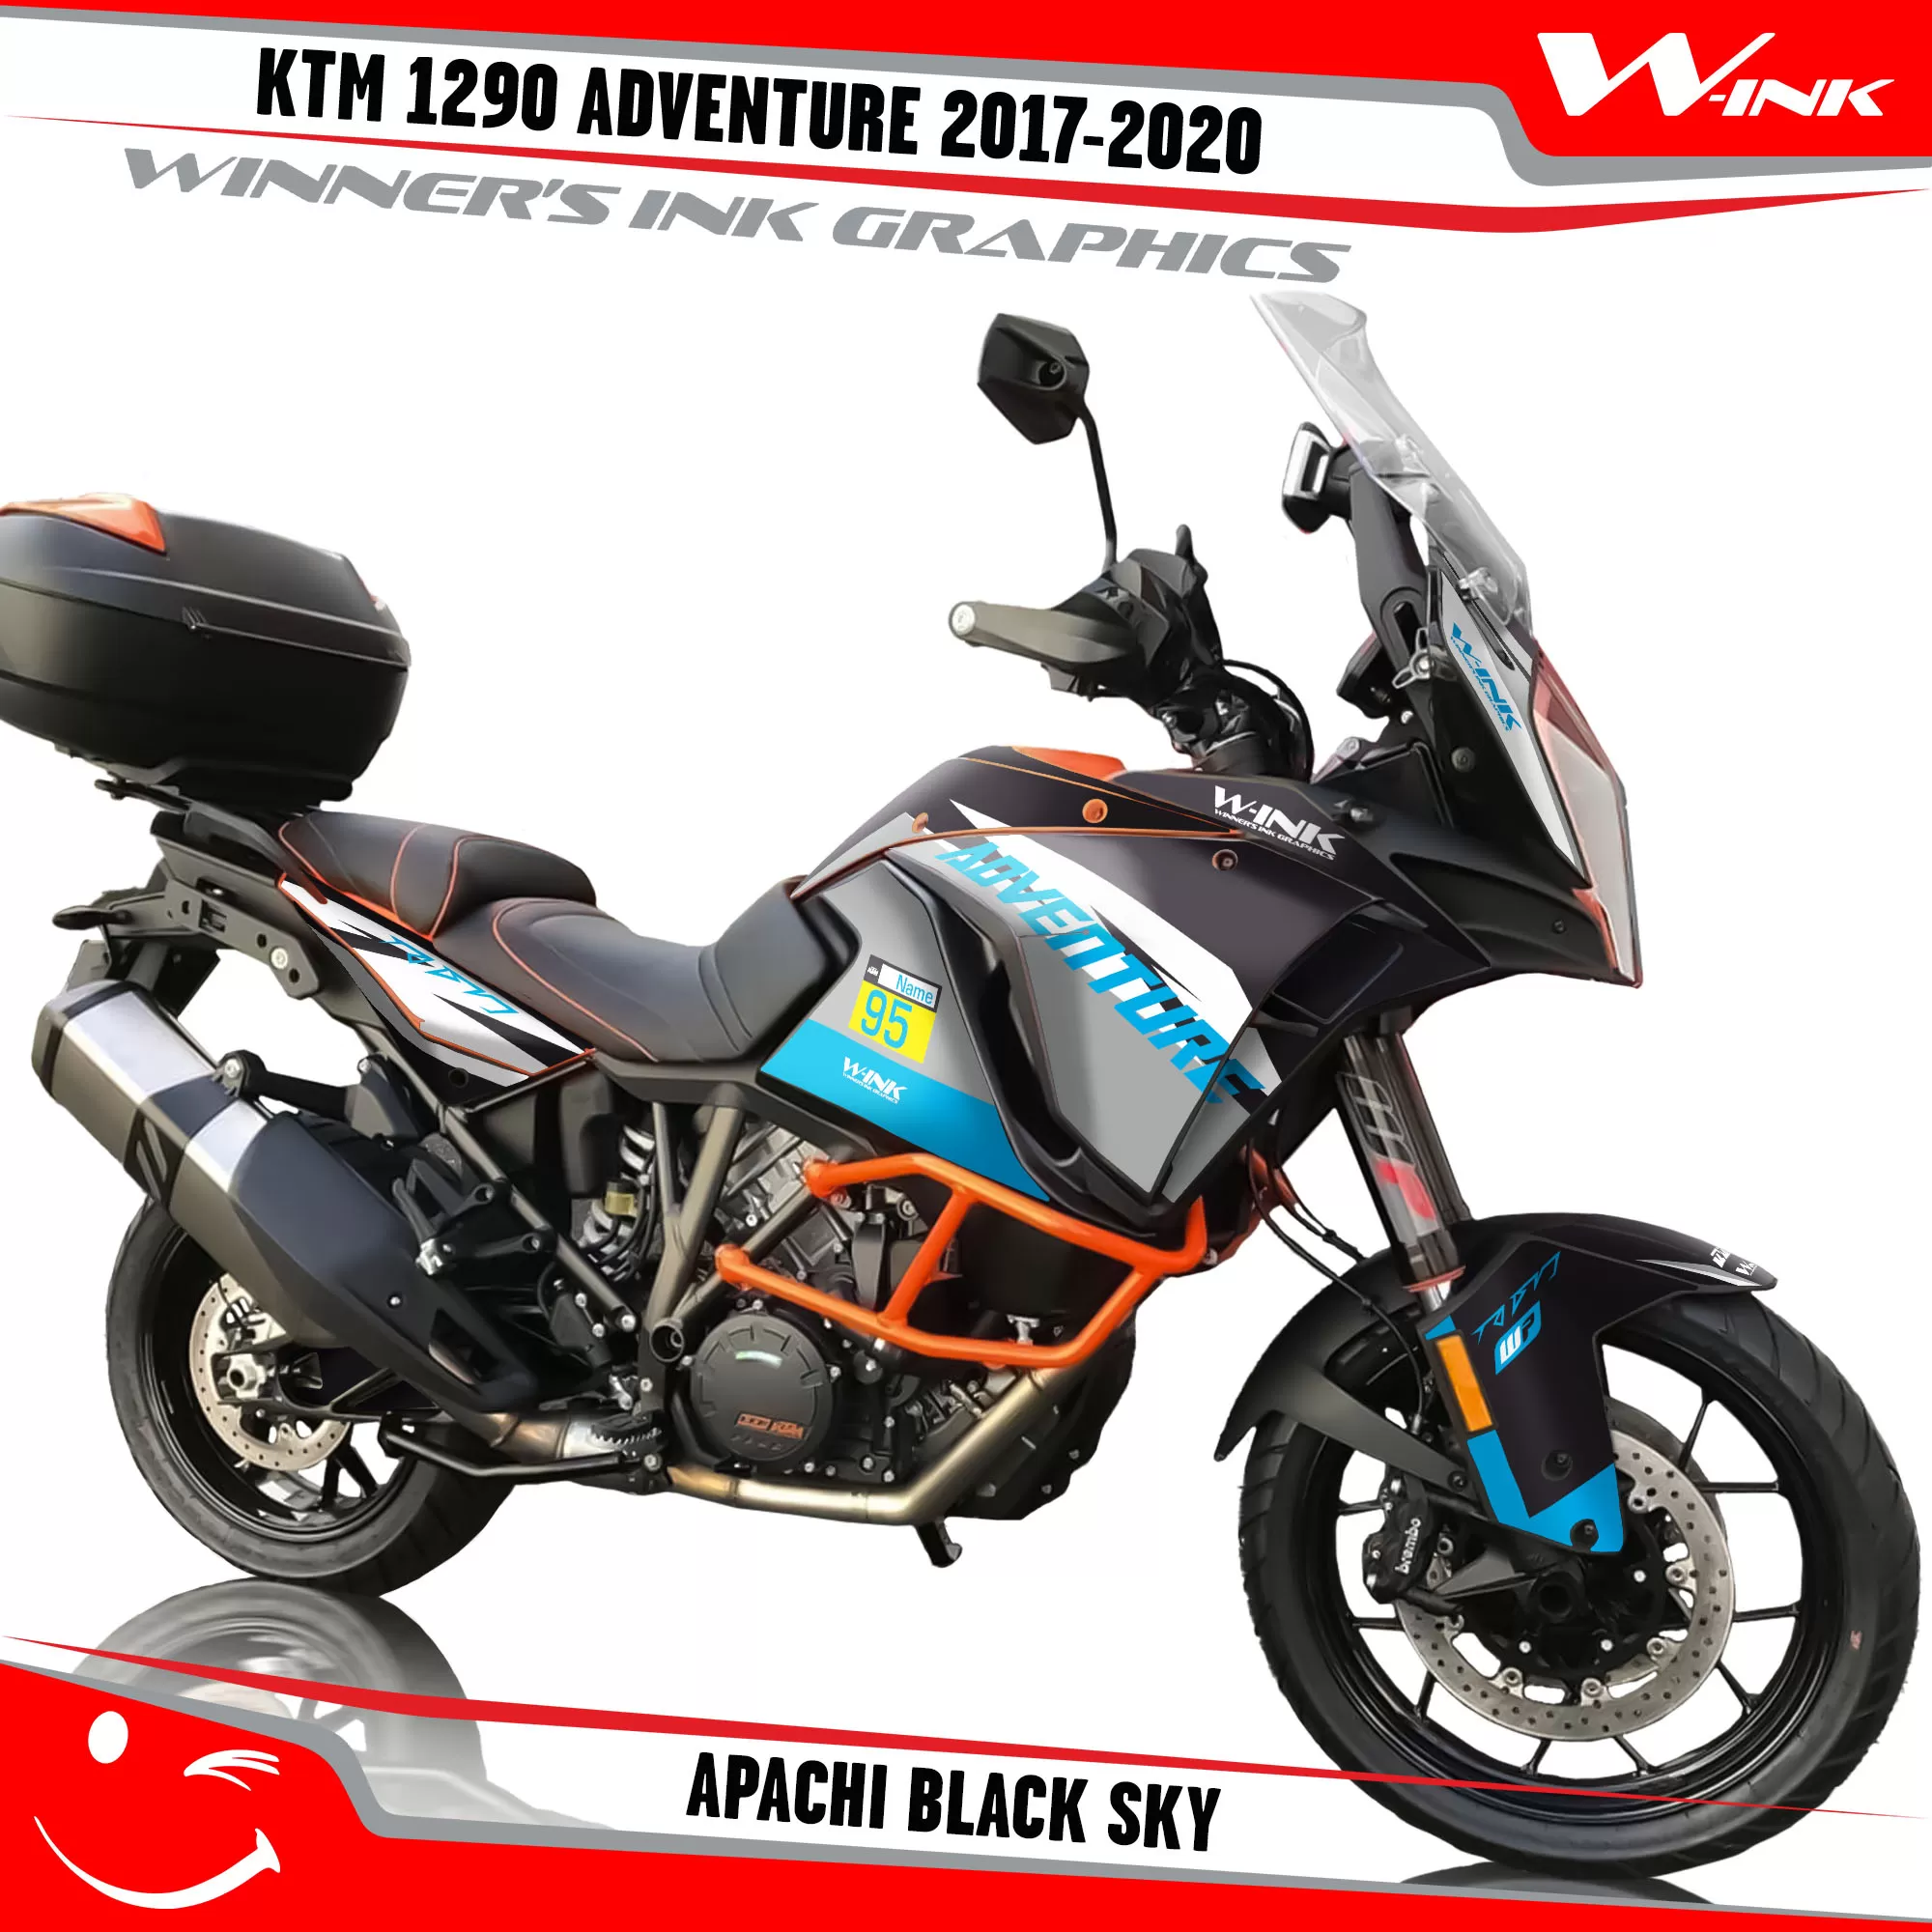 KTM-Adventure-1290-2017-2018-2019-2020-graphics-kit-and-decals-Apachi-Black-Sky